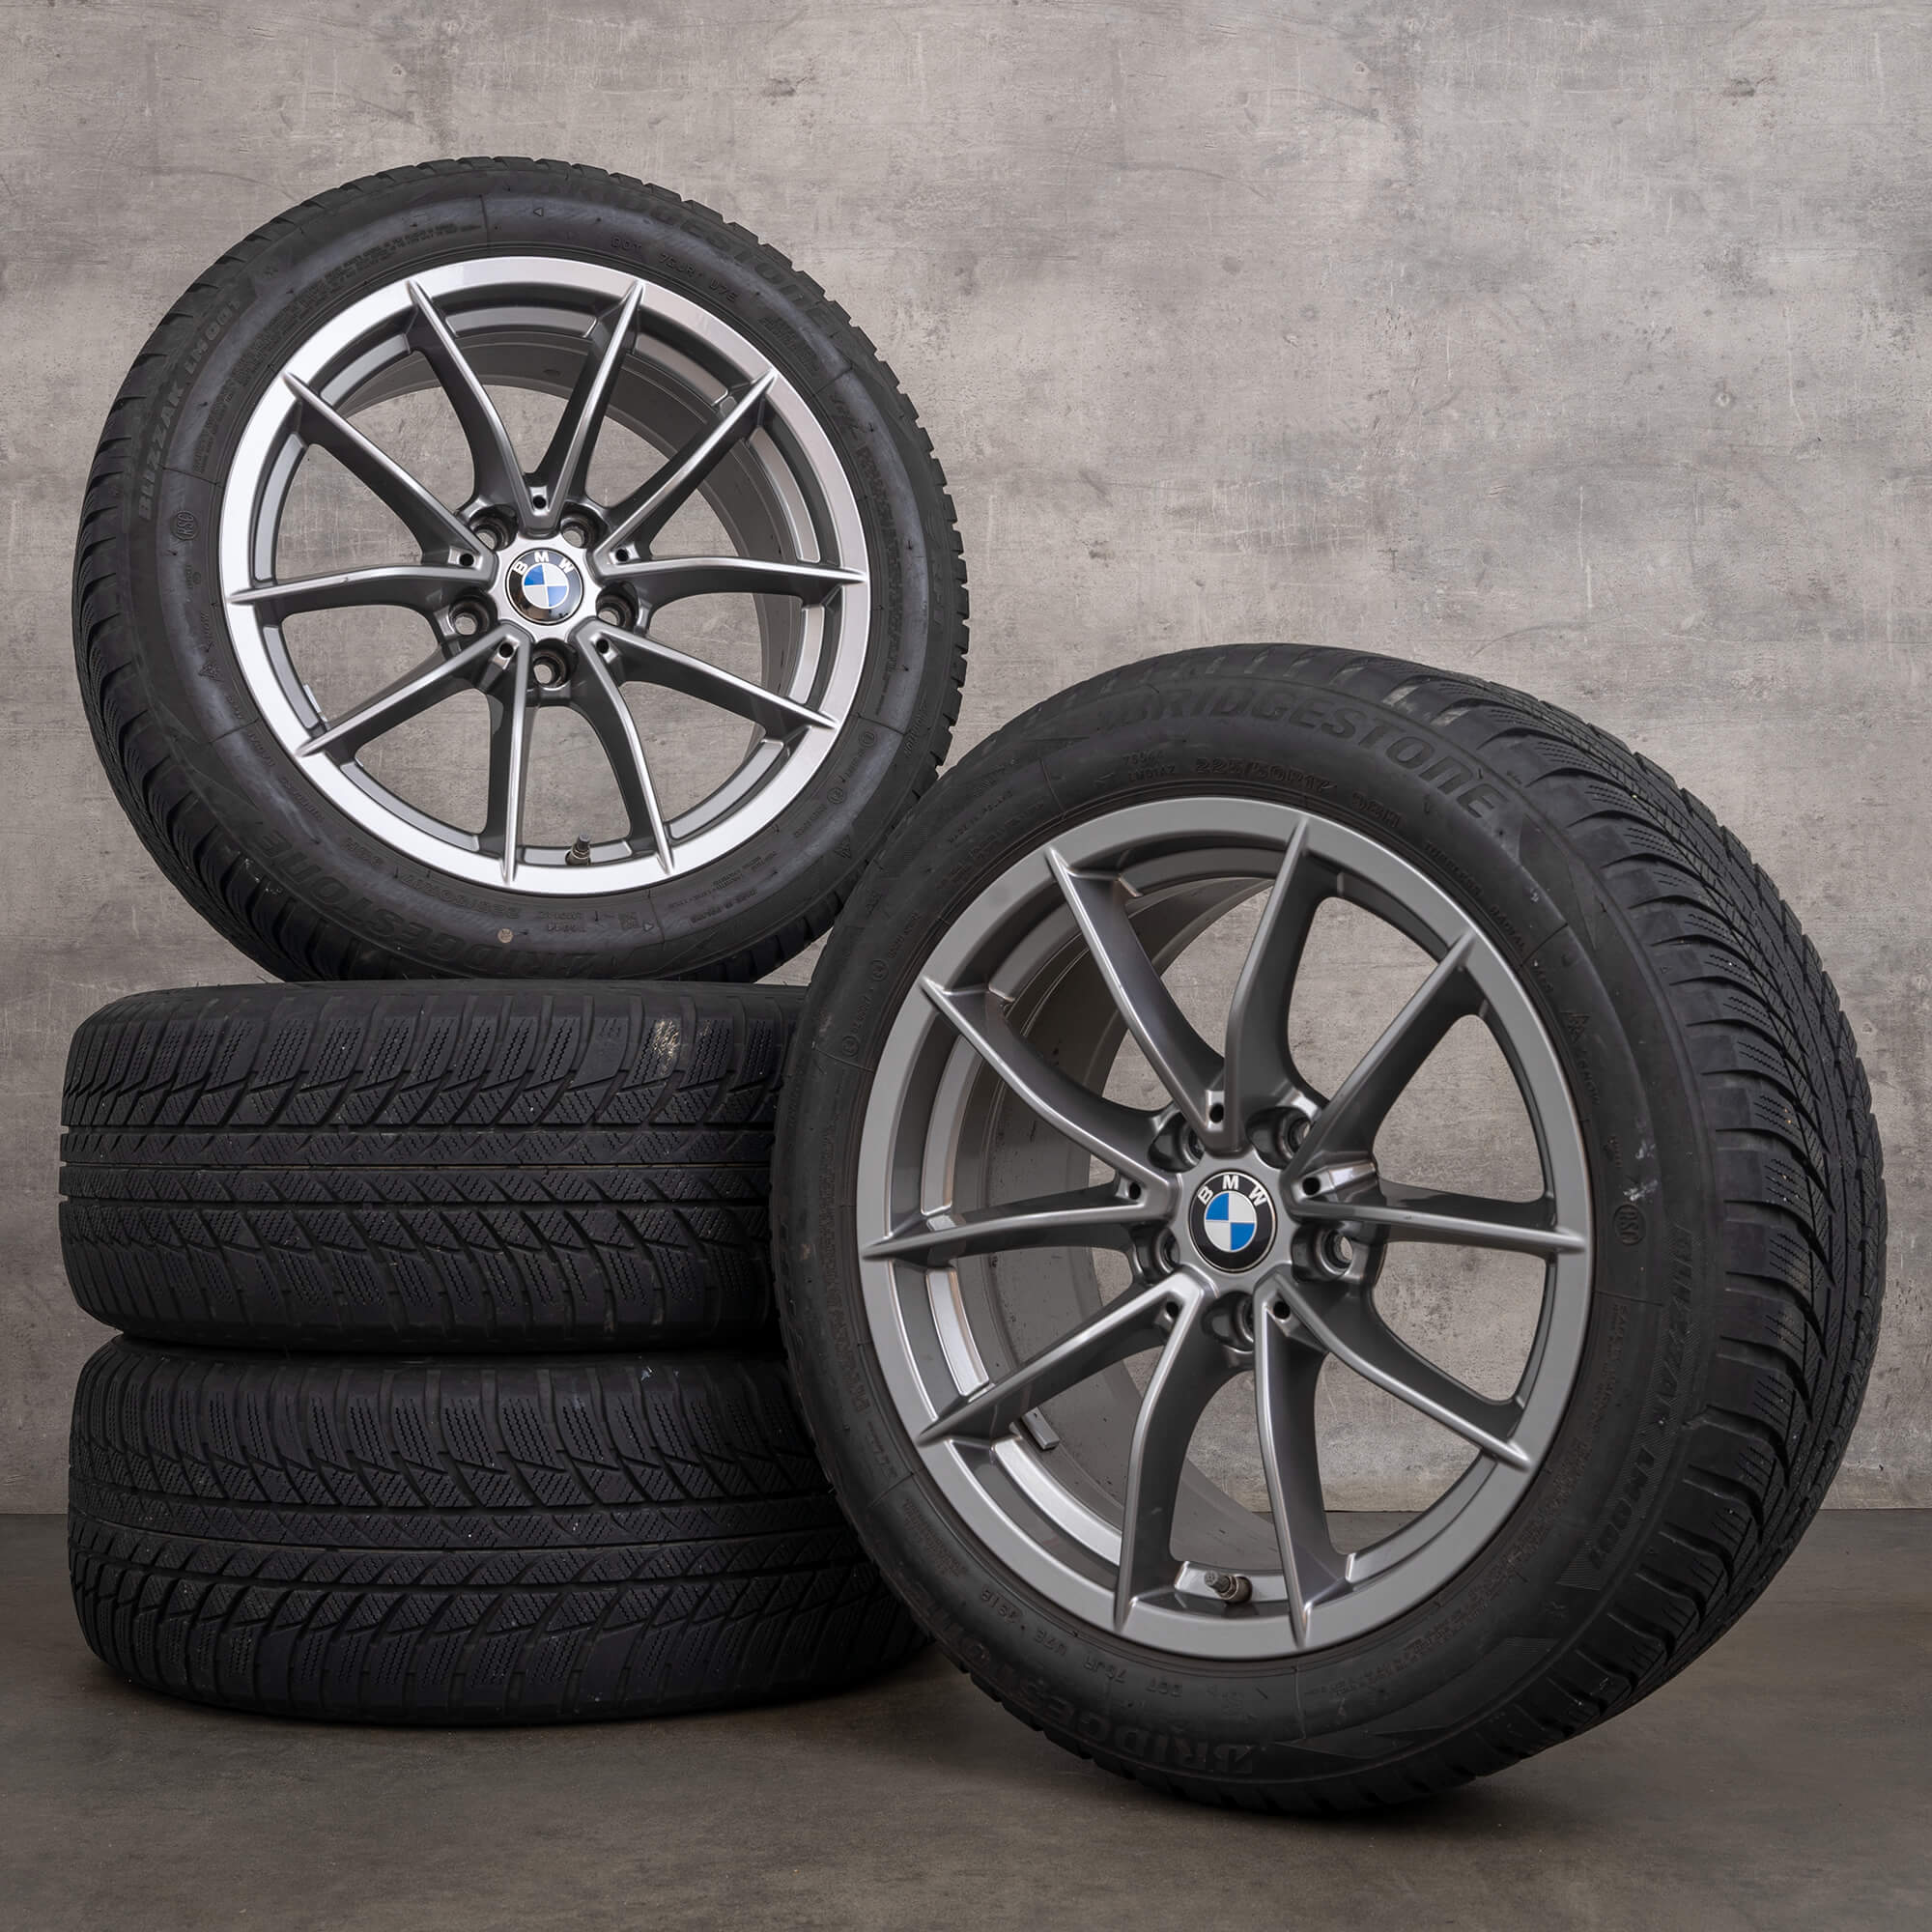 BMW Z4 G29 winter wheels 17 inch rims styling 768 tires 6886152 6886153